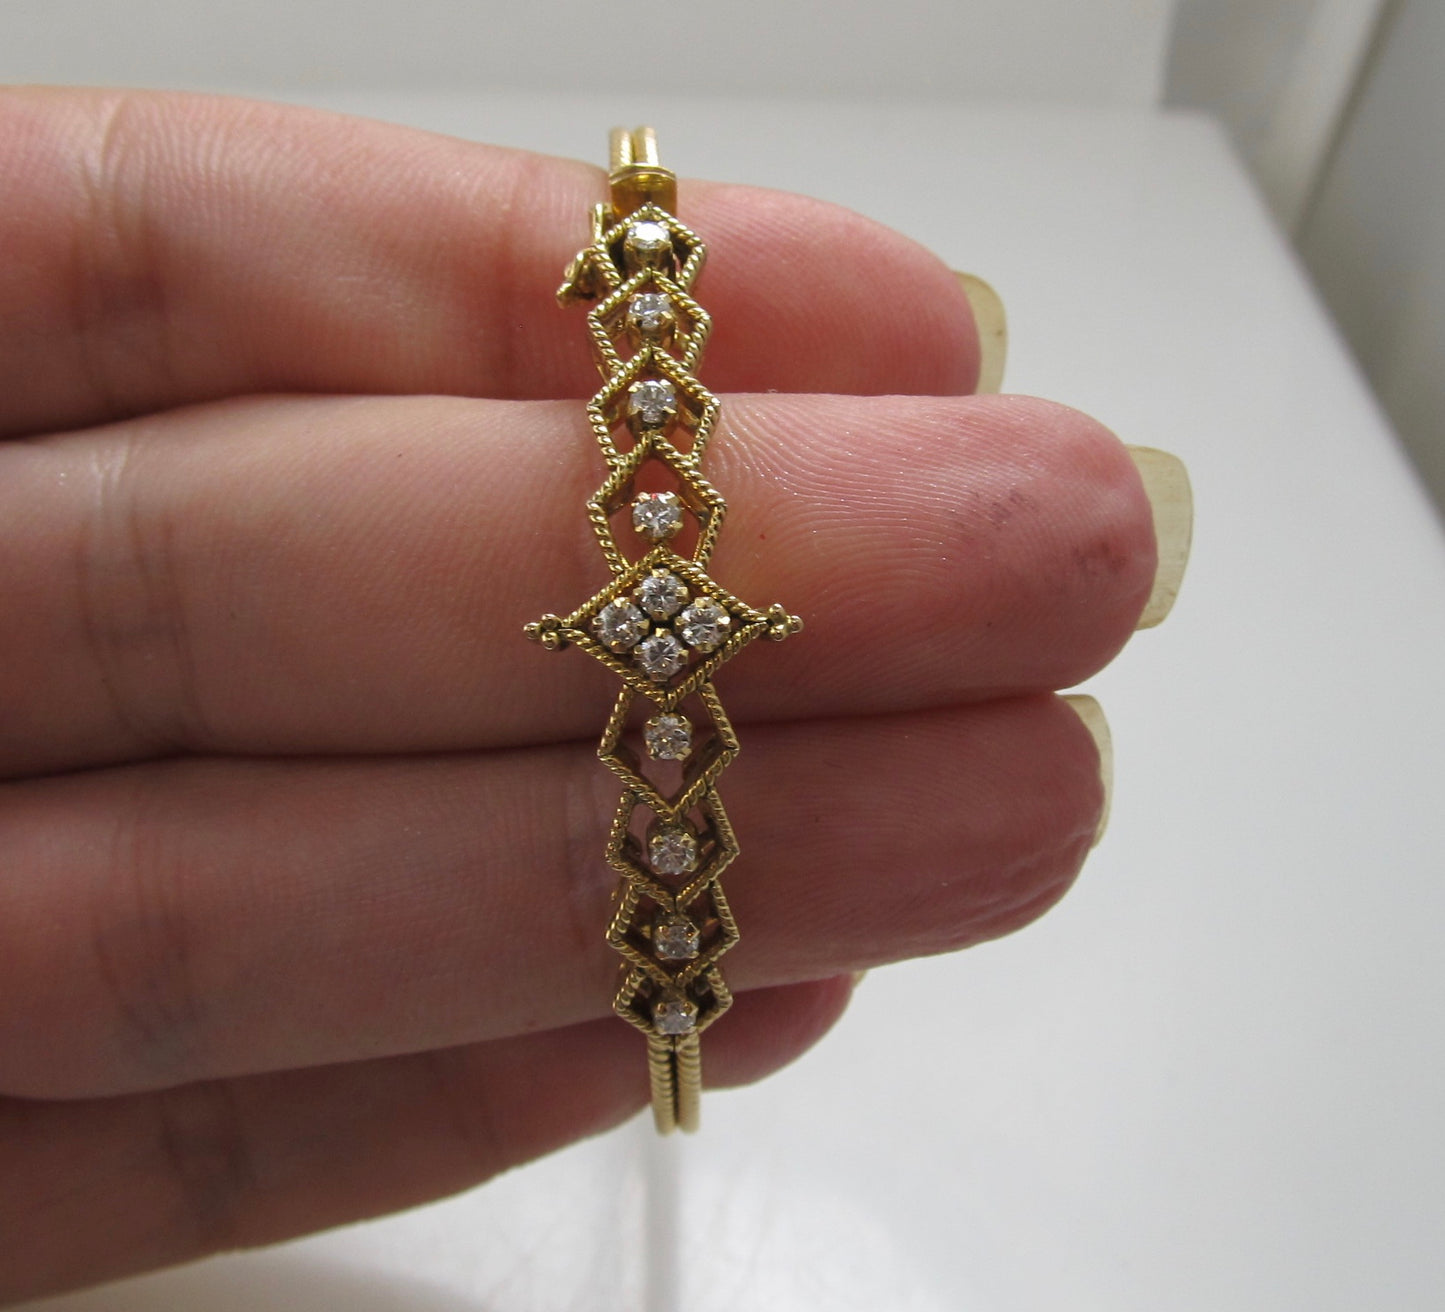 Handmade yellow gold diamond bangle bracelet